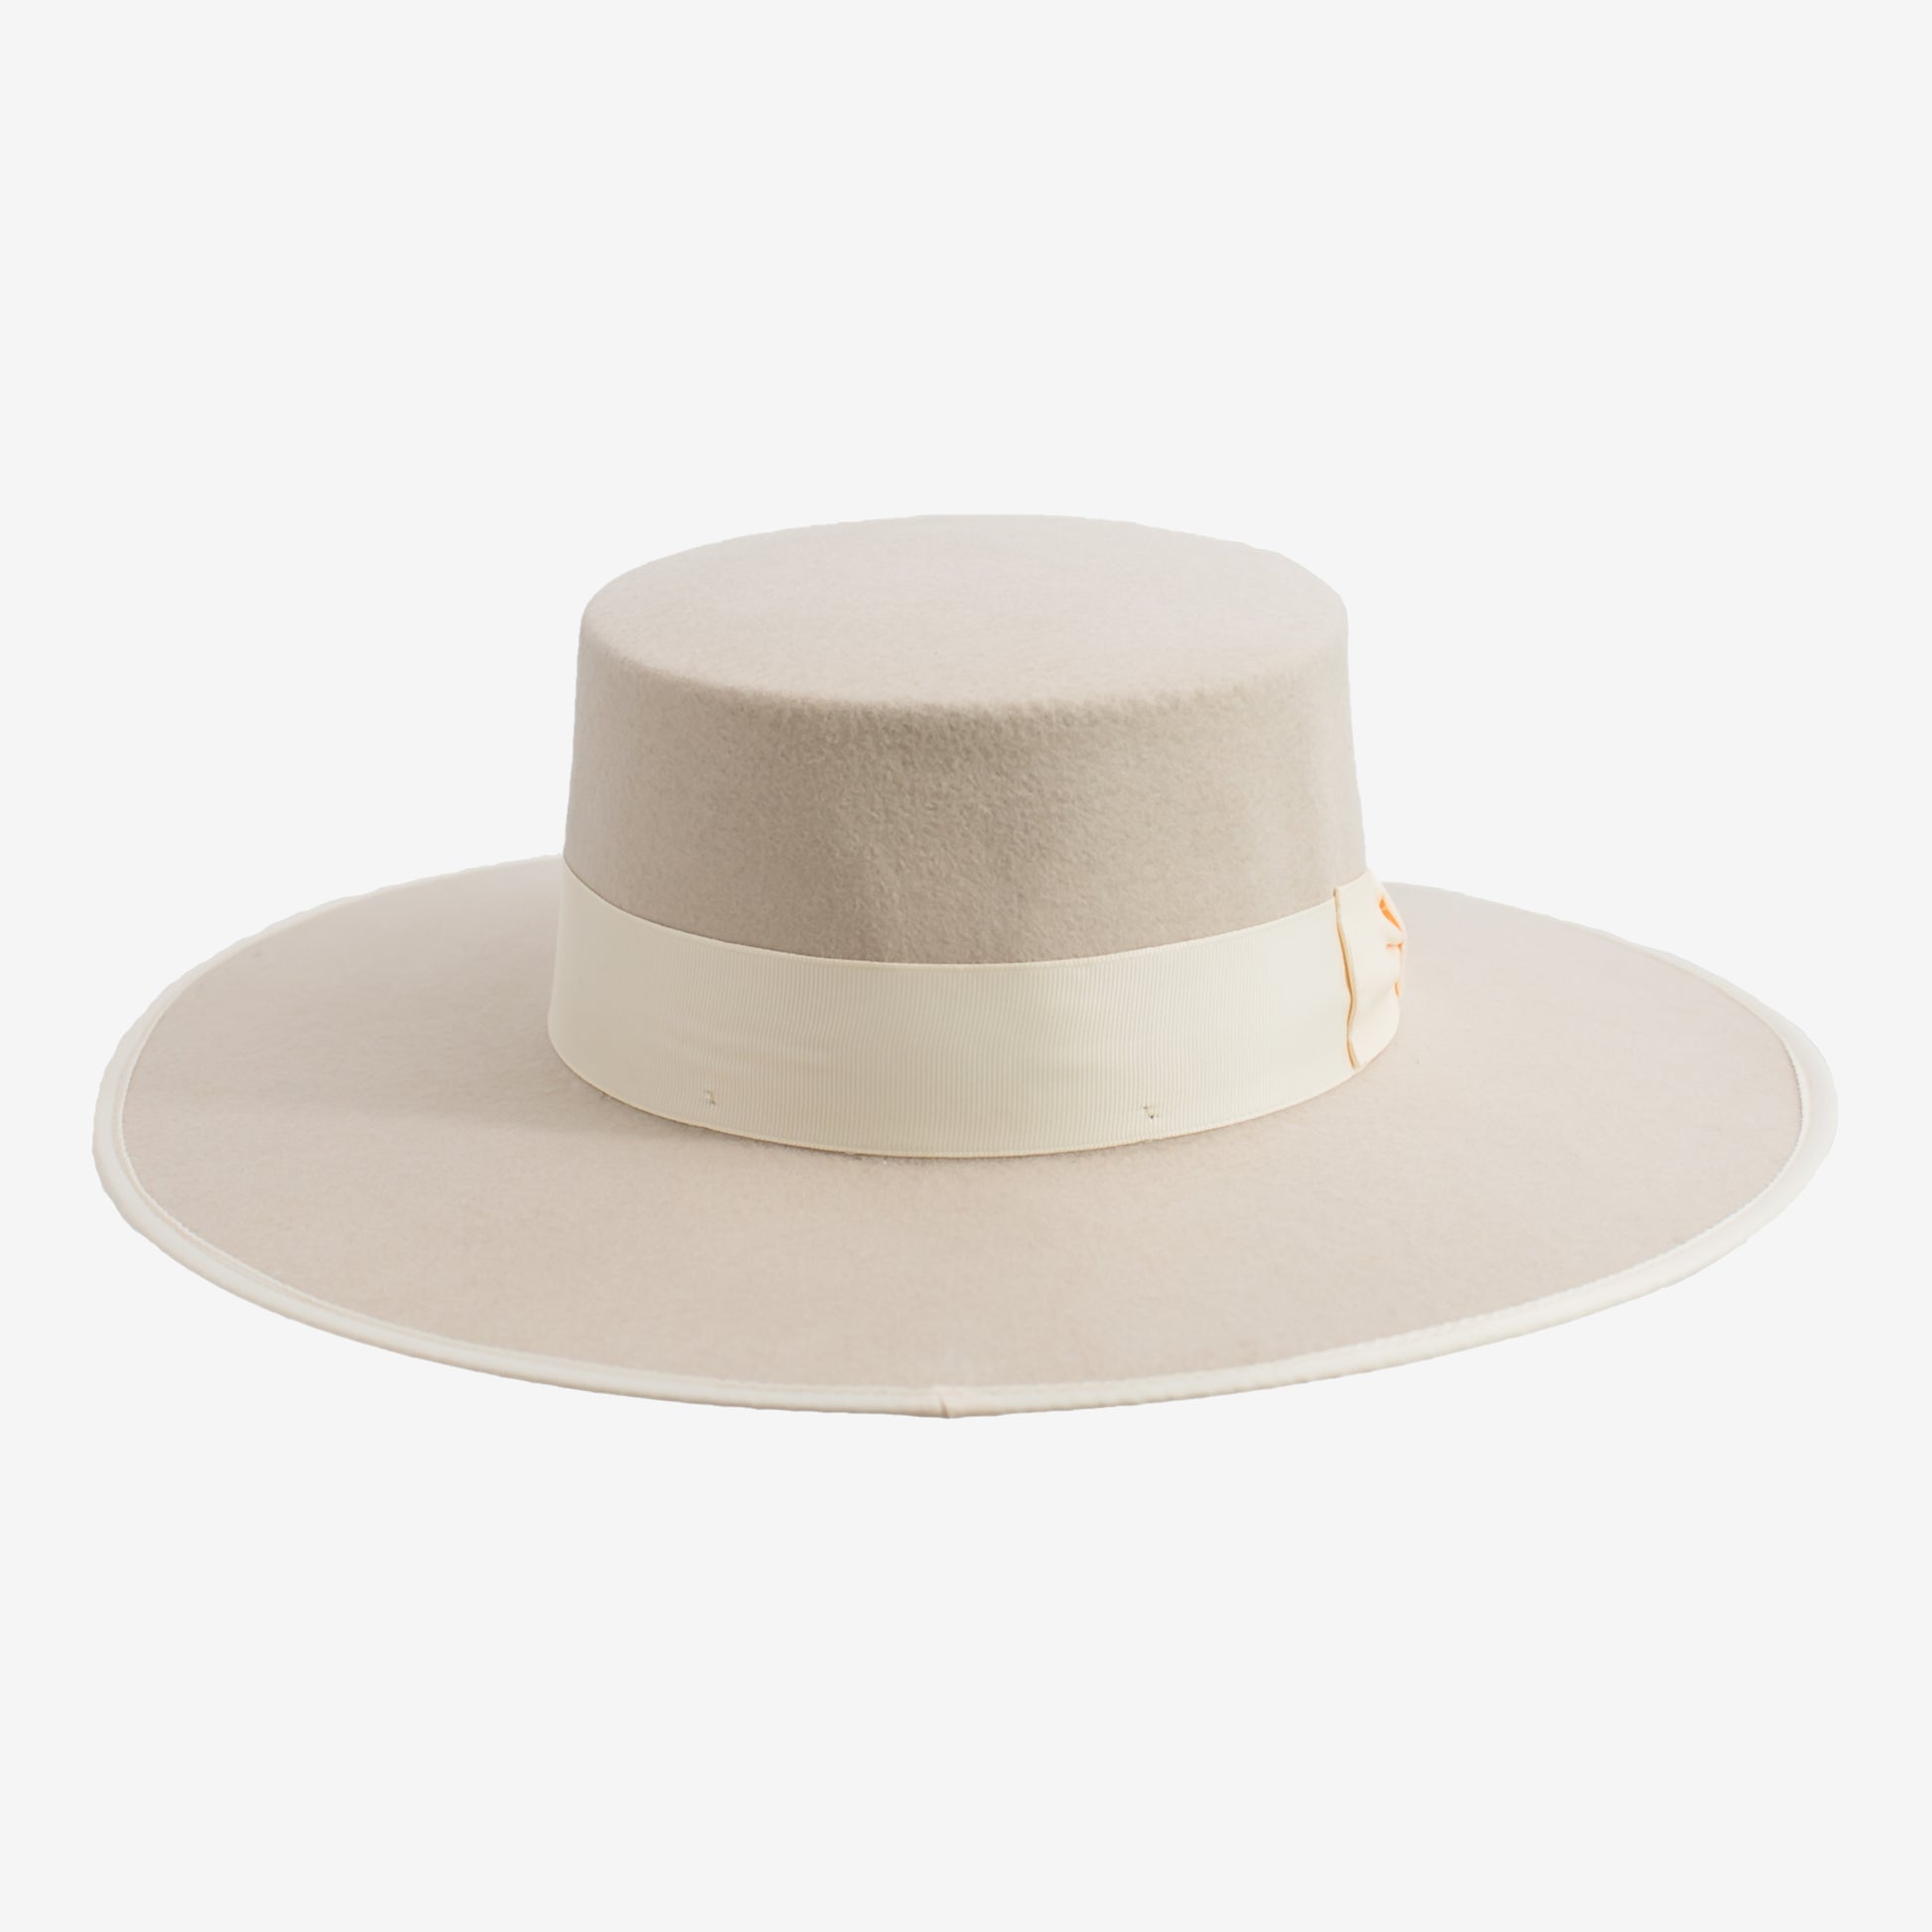 mindo-hats-claudia-cordobes-wool-hat-cream-back